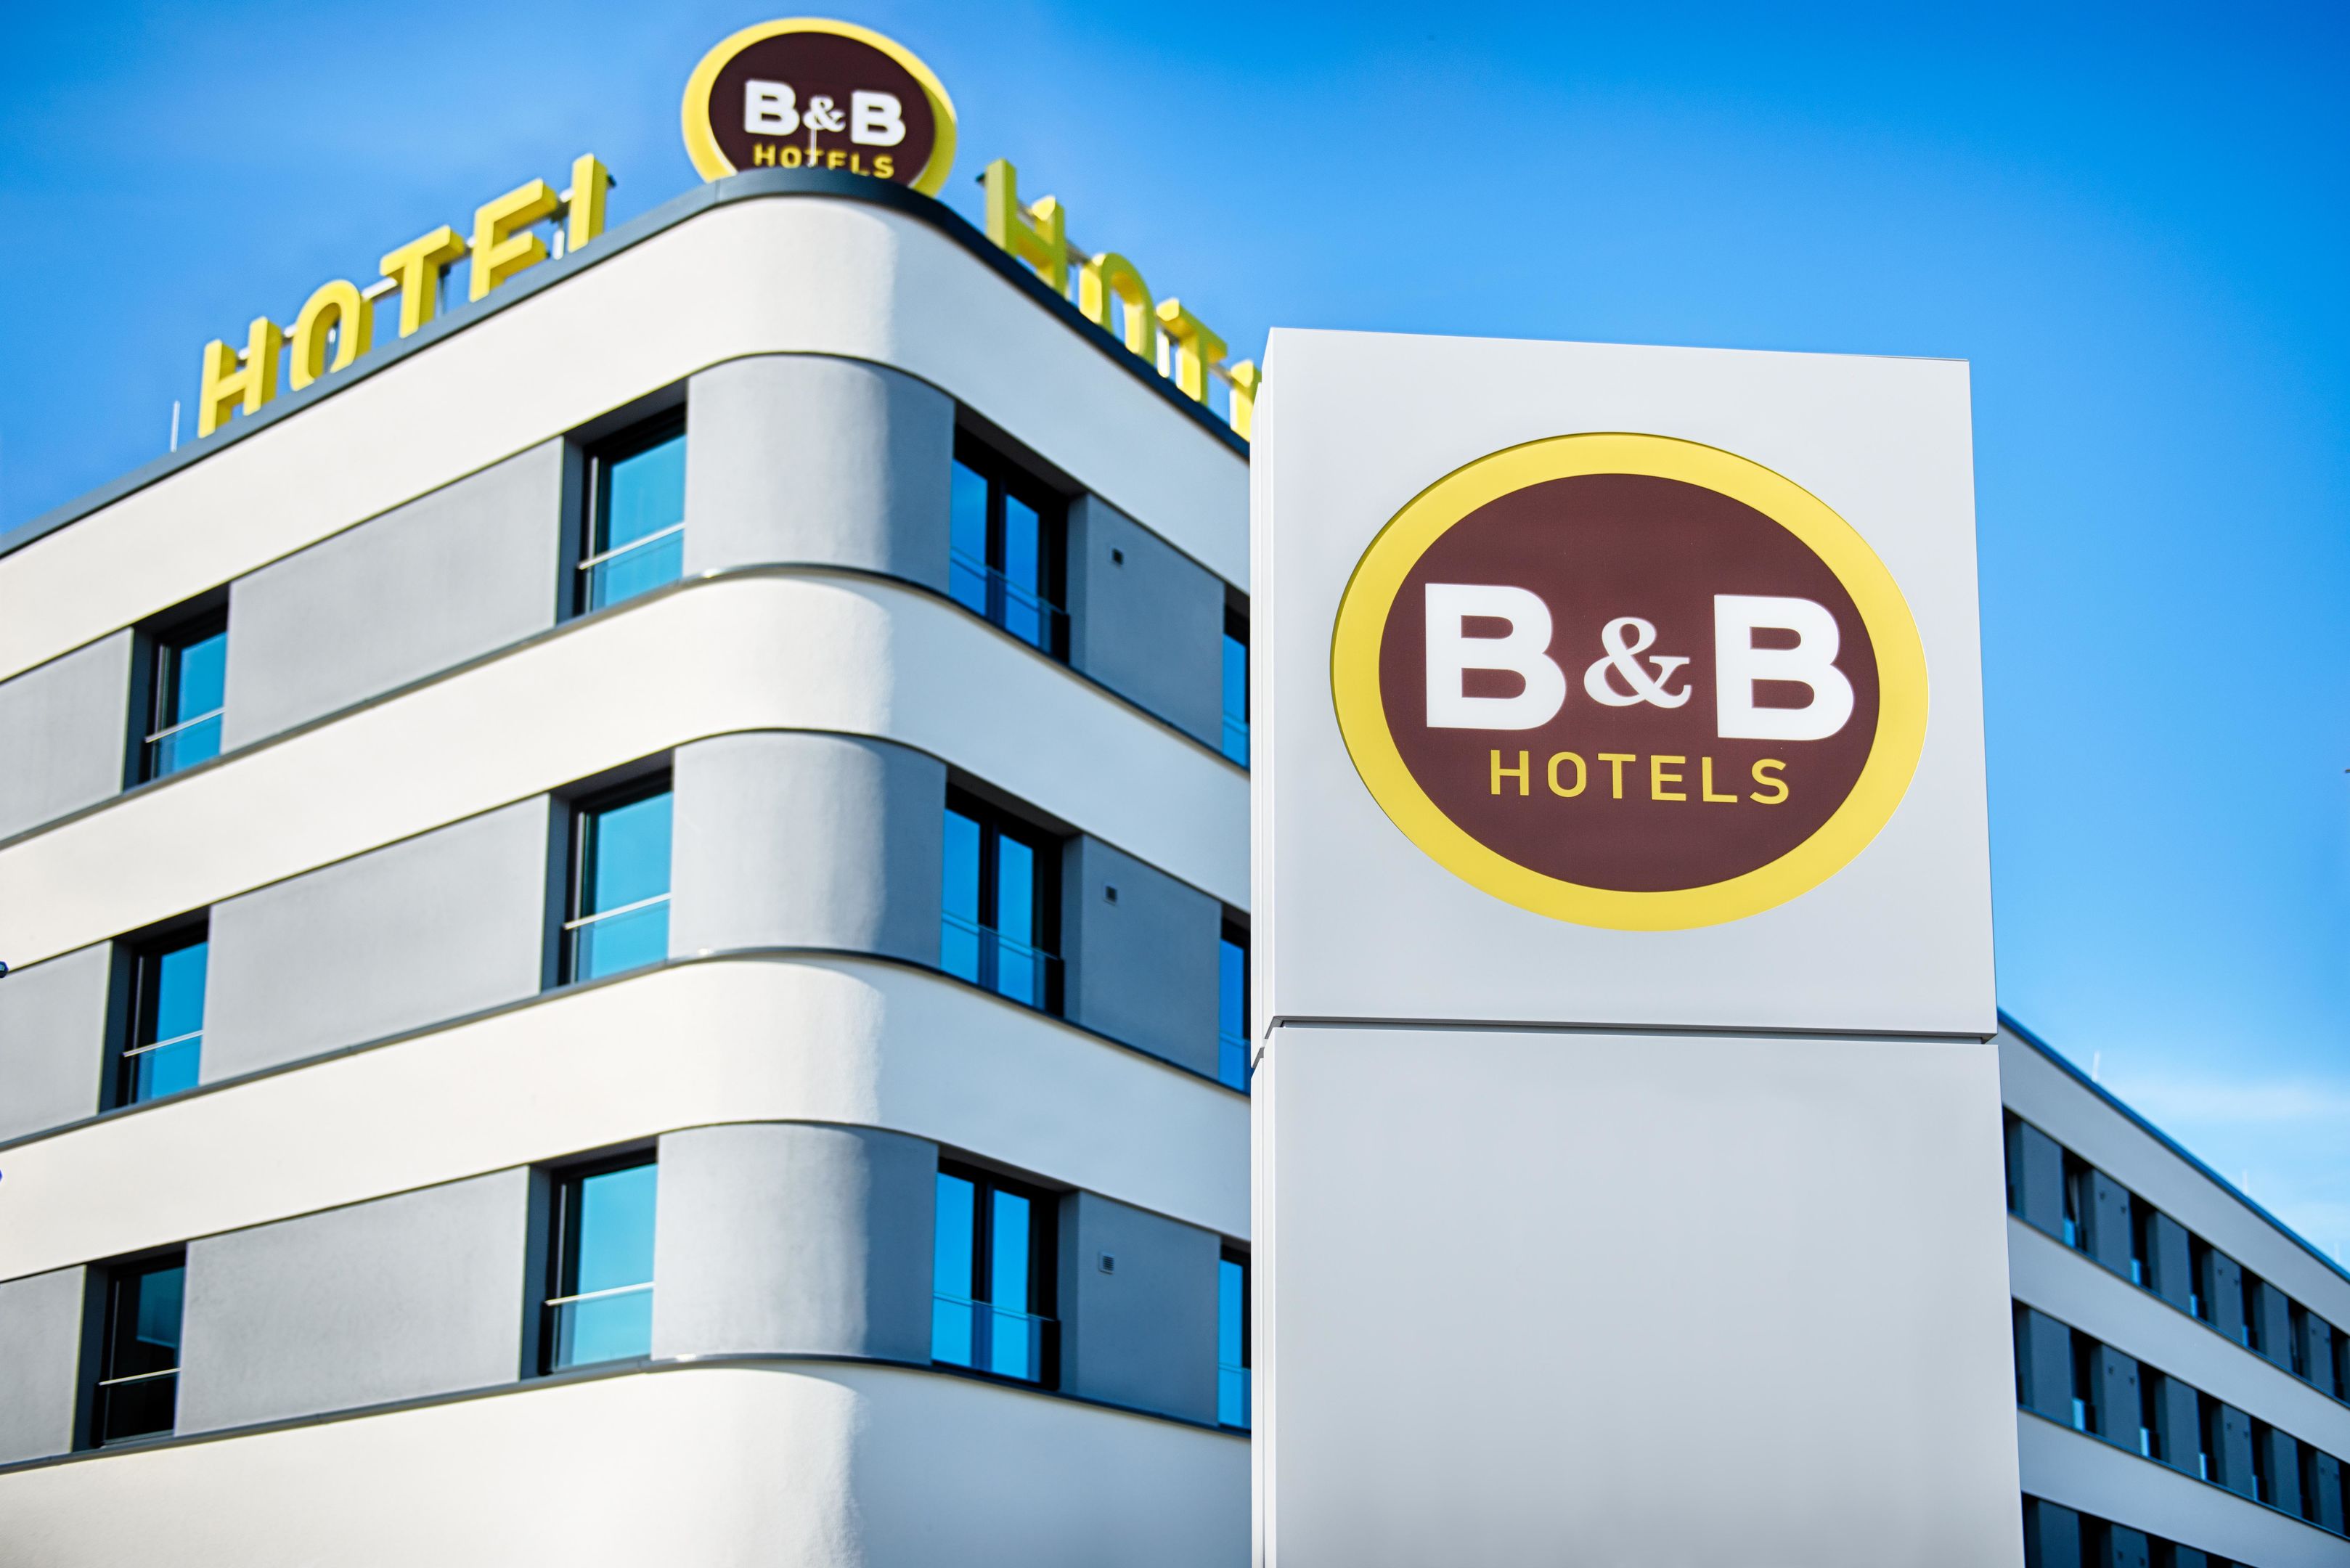 B&B HOTEL Rostock-Hafen, Gaffelschonerweg 1 in Rostock